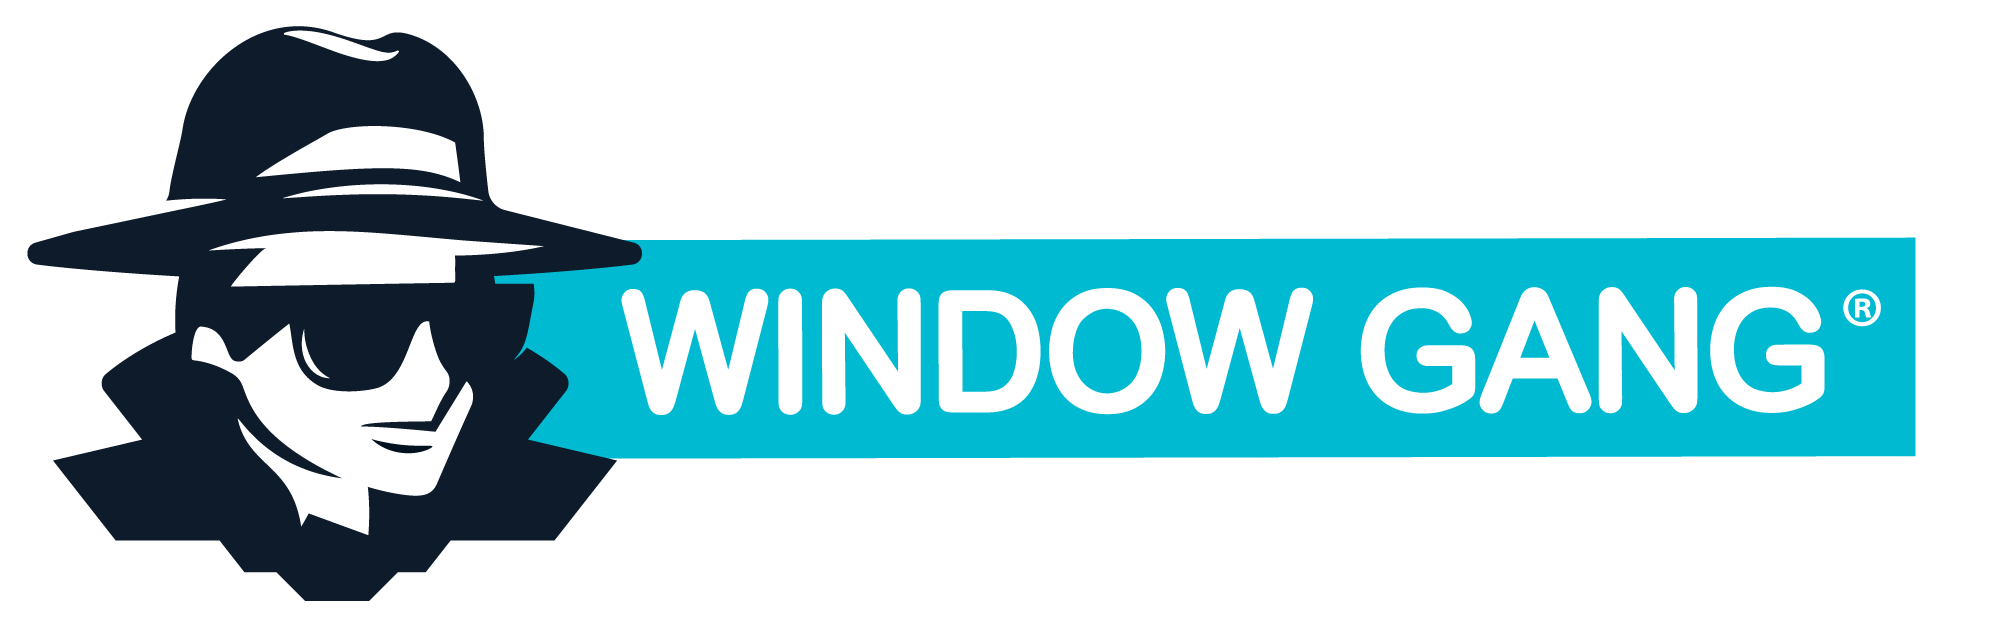 Window Gang logo